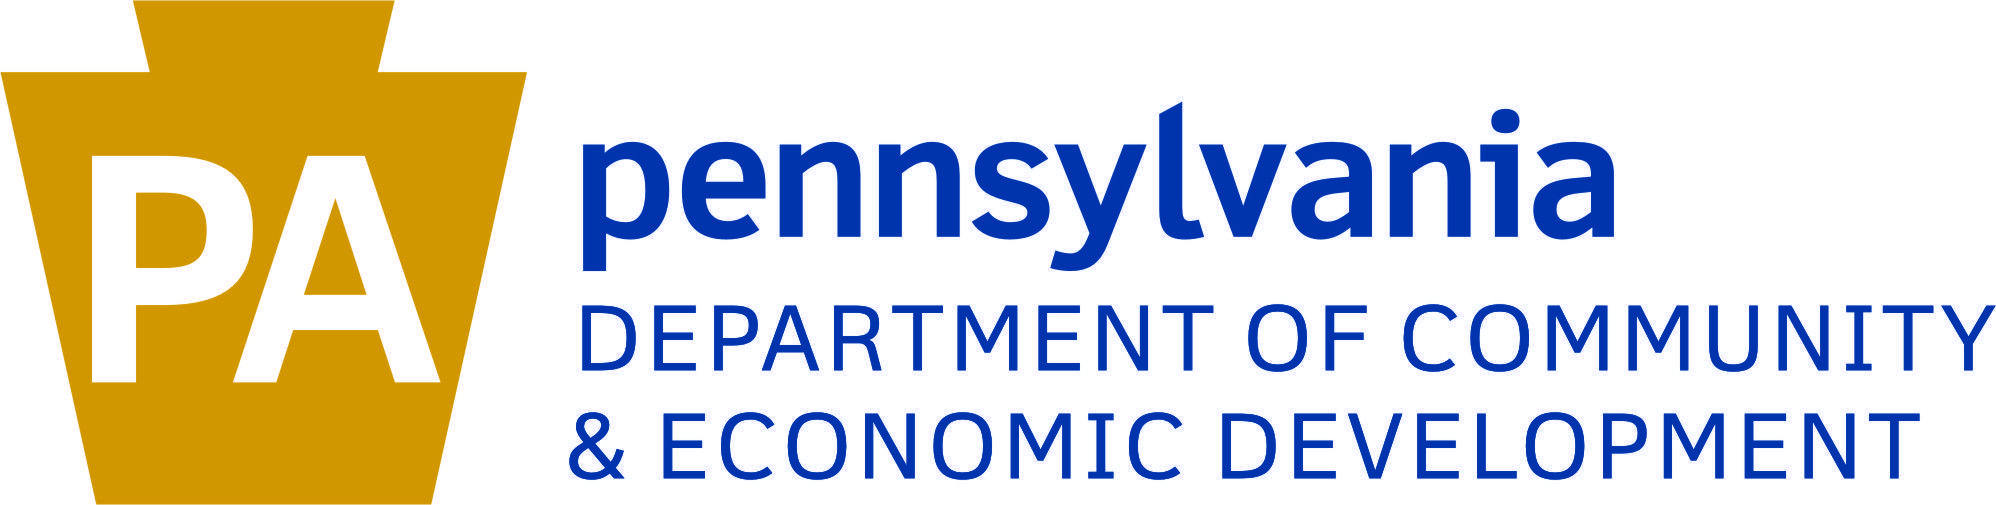 PennDOT Logo - Logo Use Guidelines - PA Department of Community & Economic Development